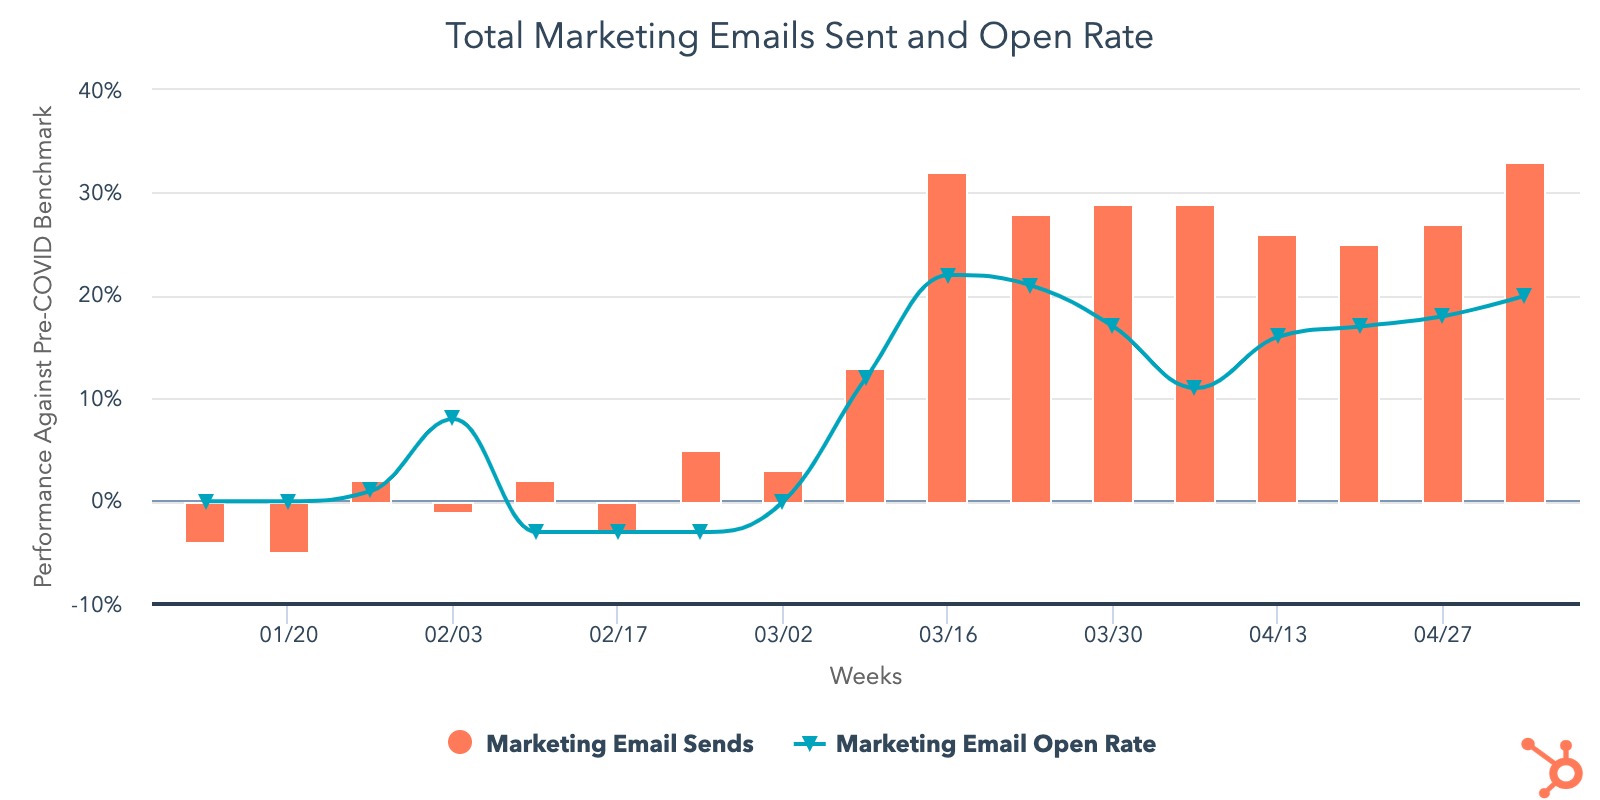 Marketing Email Sends vs pre-COVID-19 Benchmark